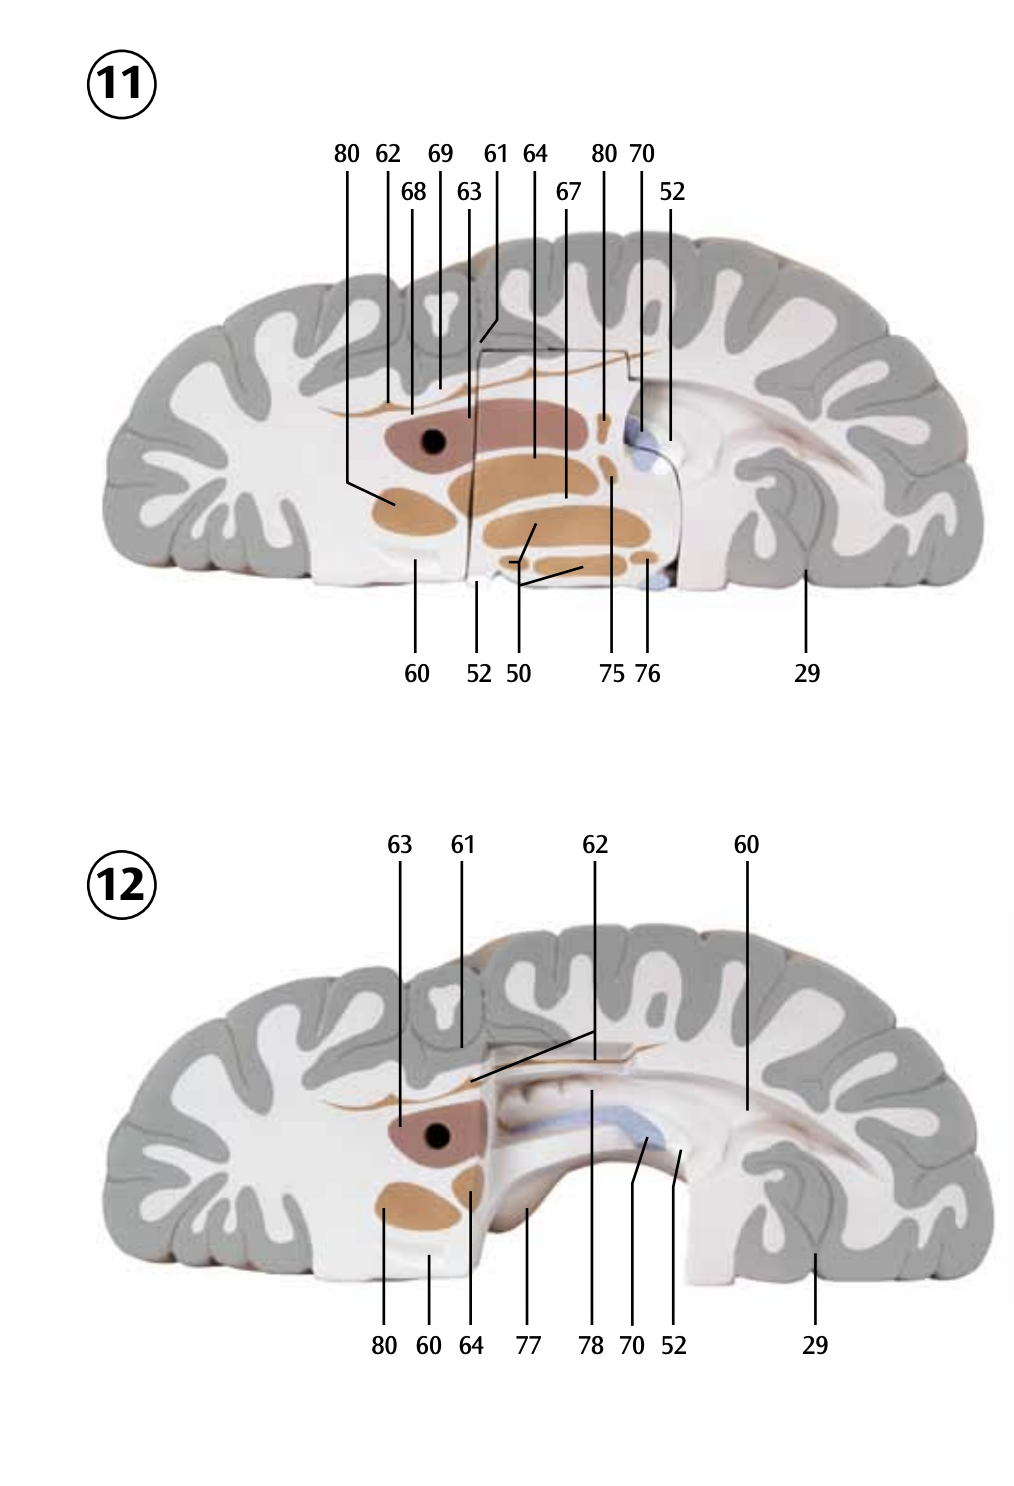 Giant brain model in 14 parts